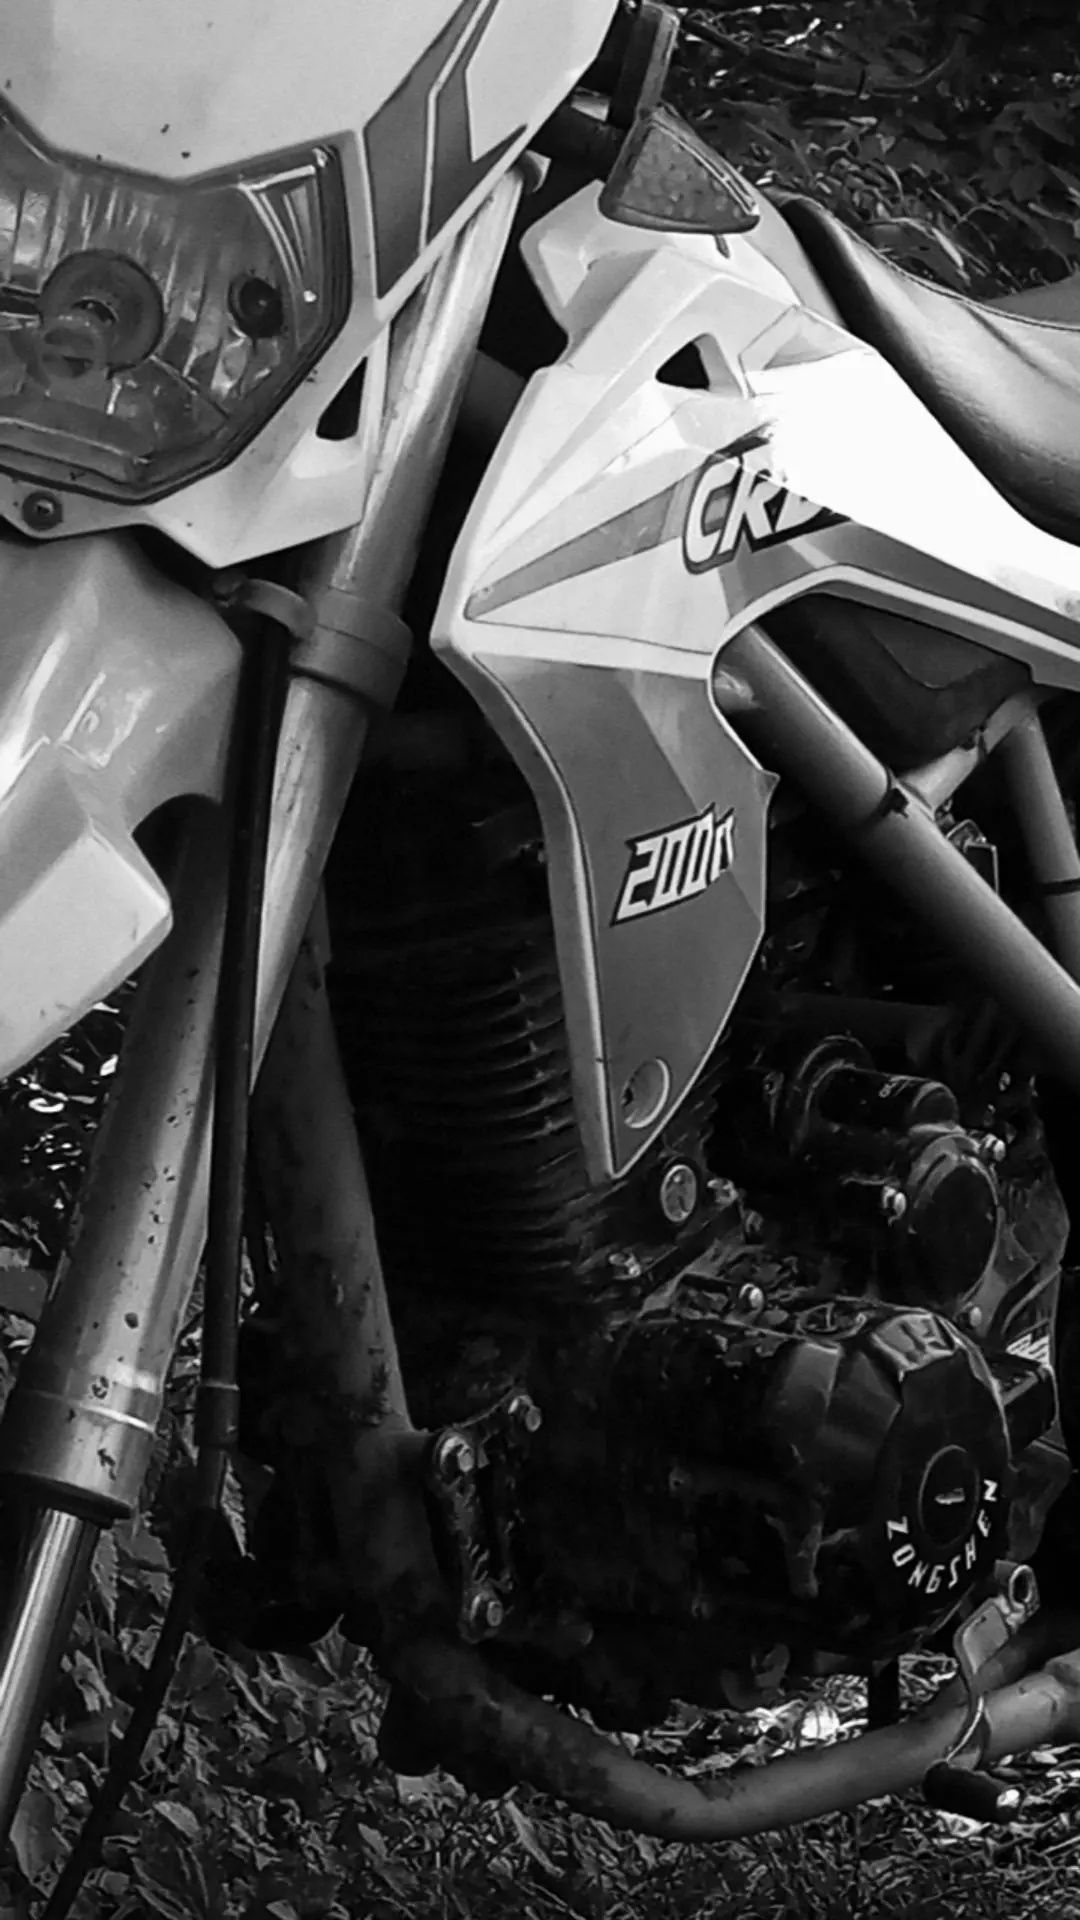 Skybike crdx 200